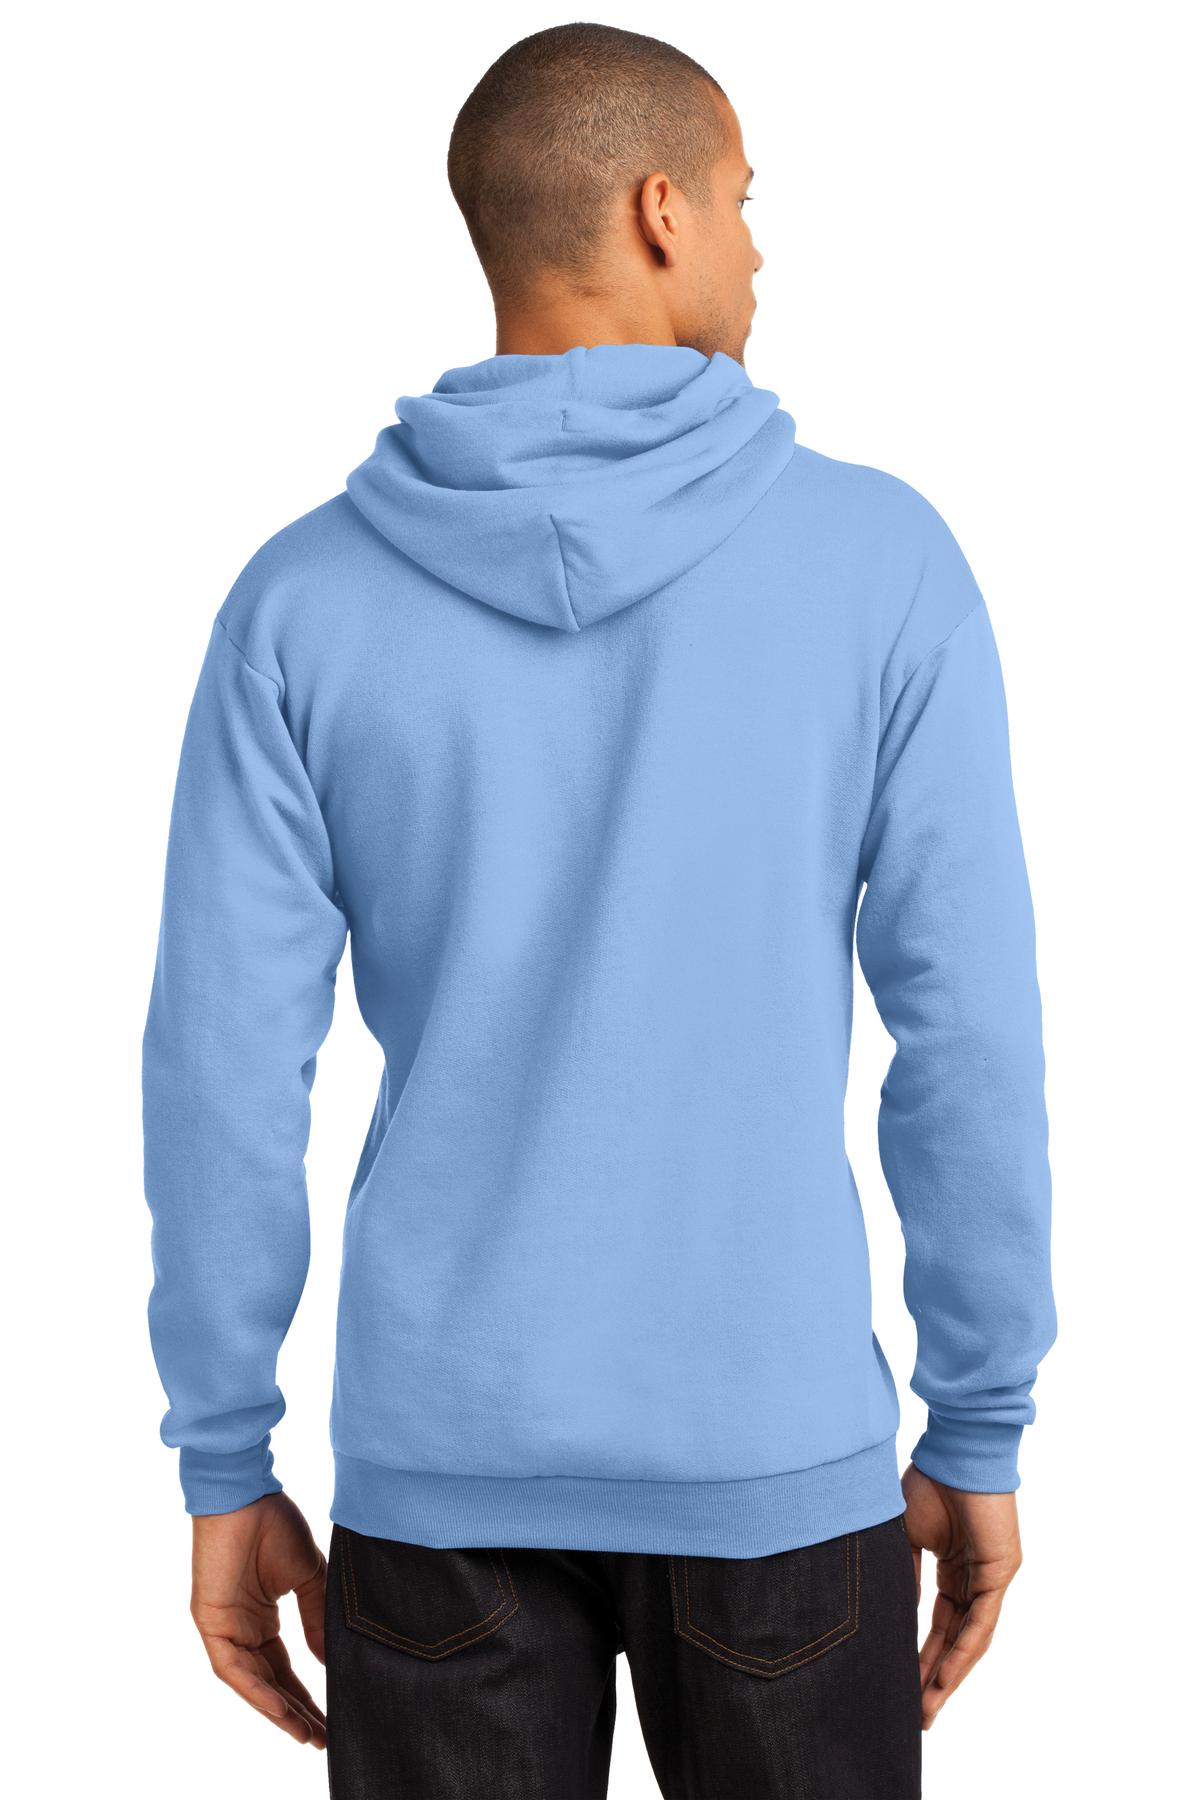 Port & Company® - Core Fleece Pullover Hooded Sweatshirt. PC78H [Light Blue] - DFW Impression